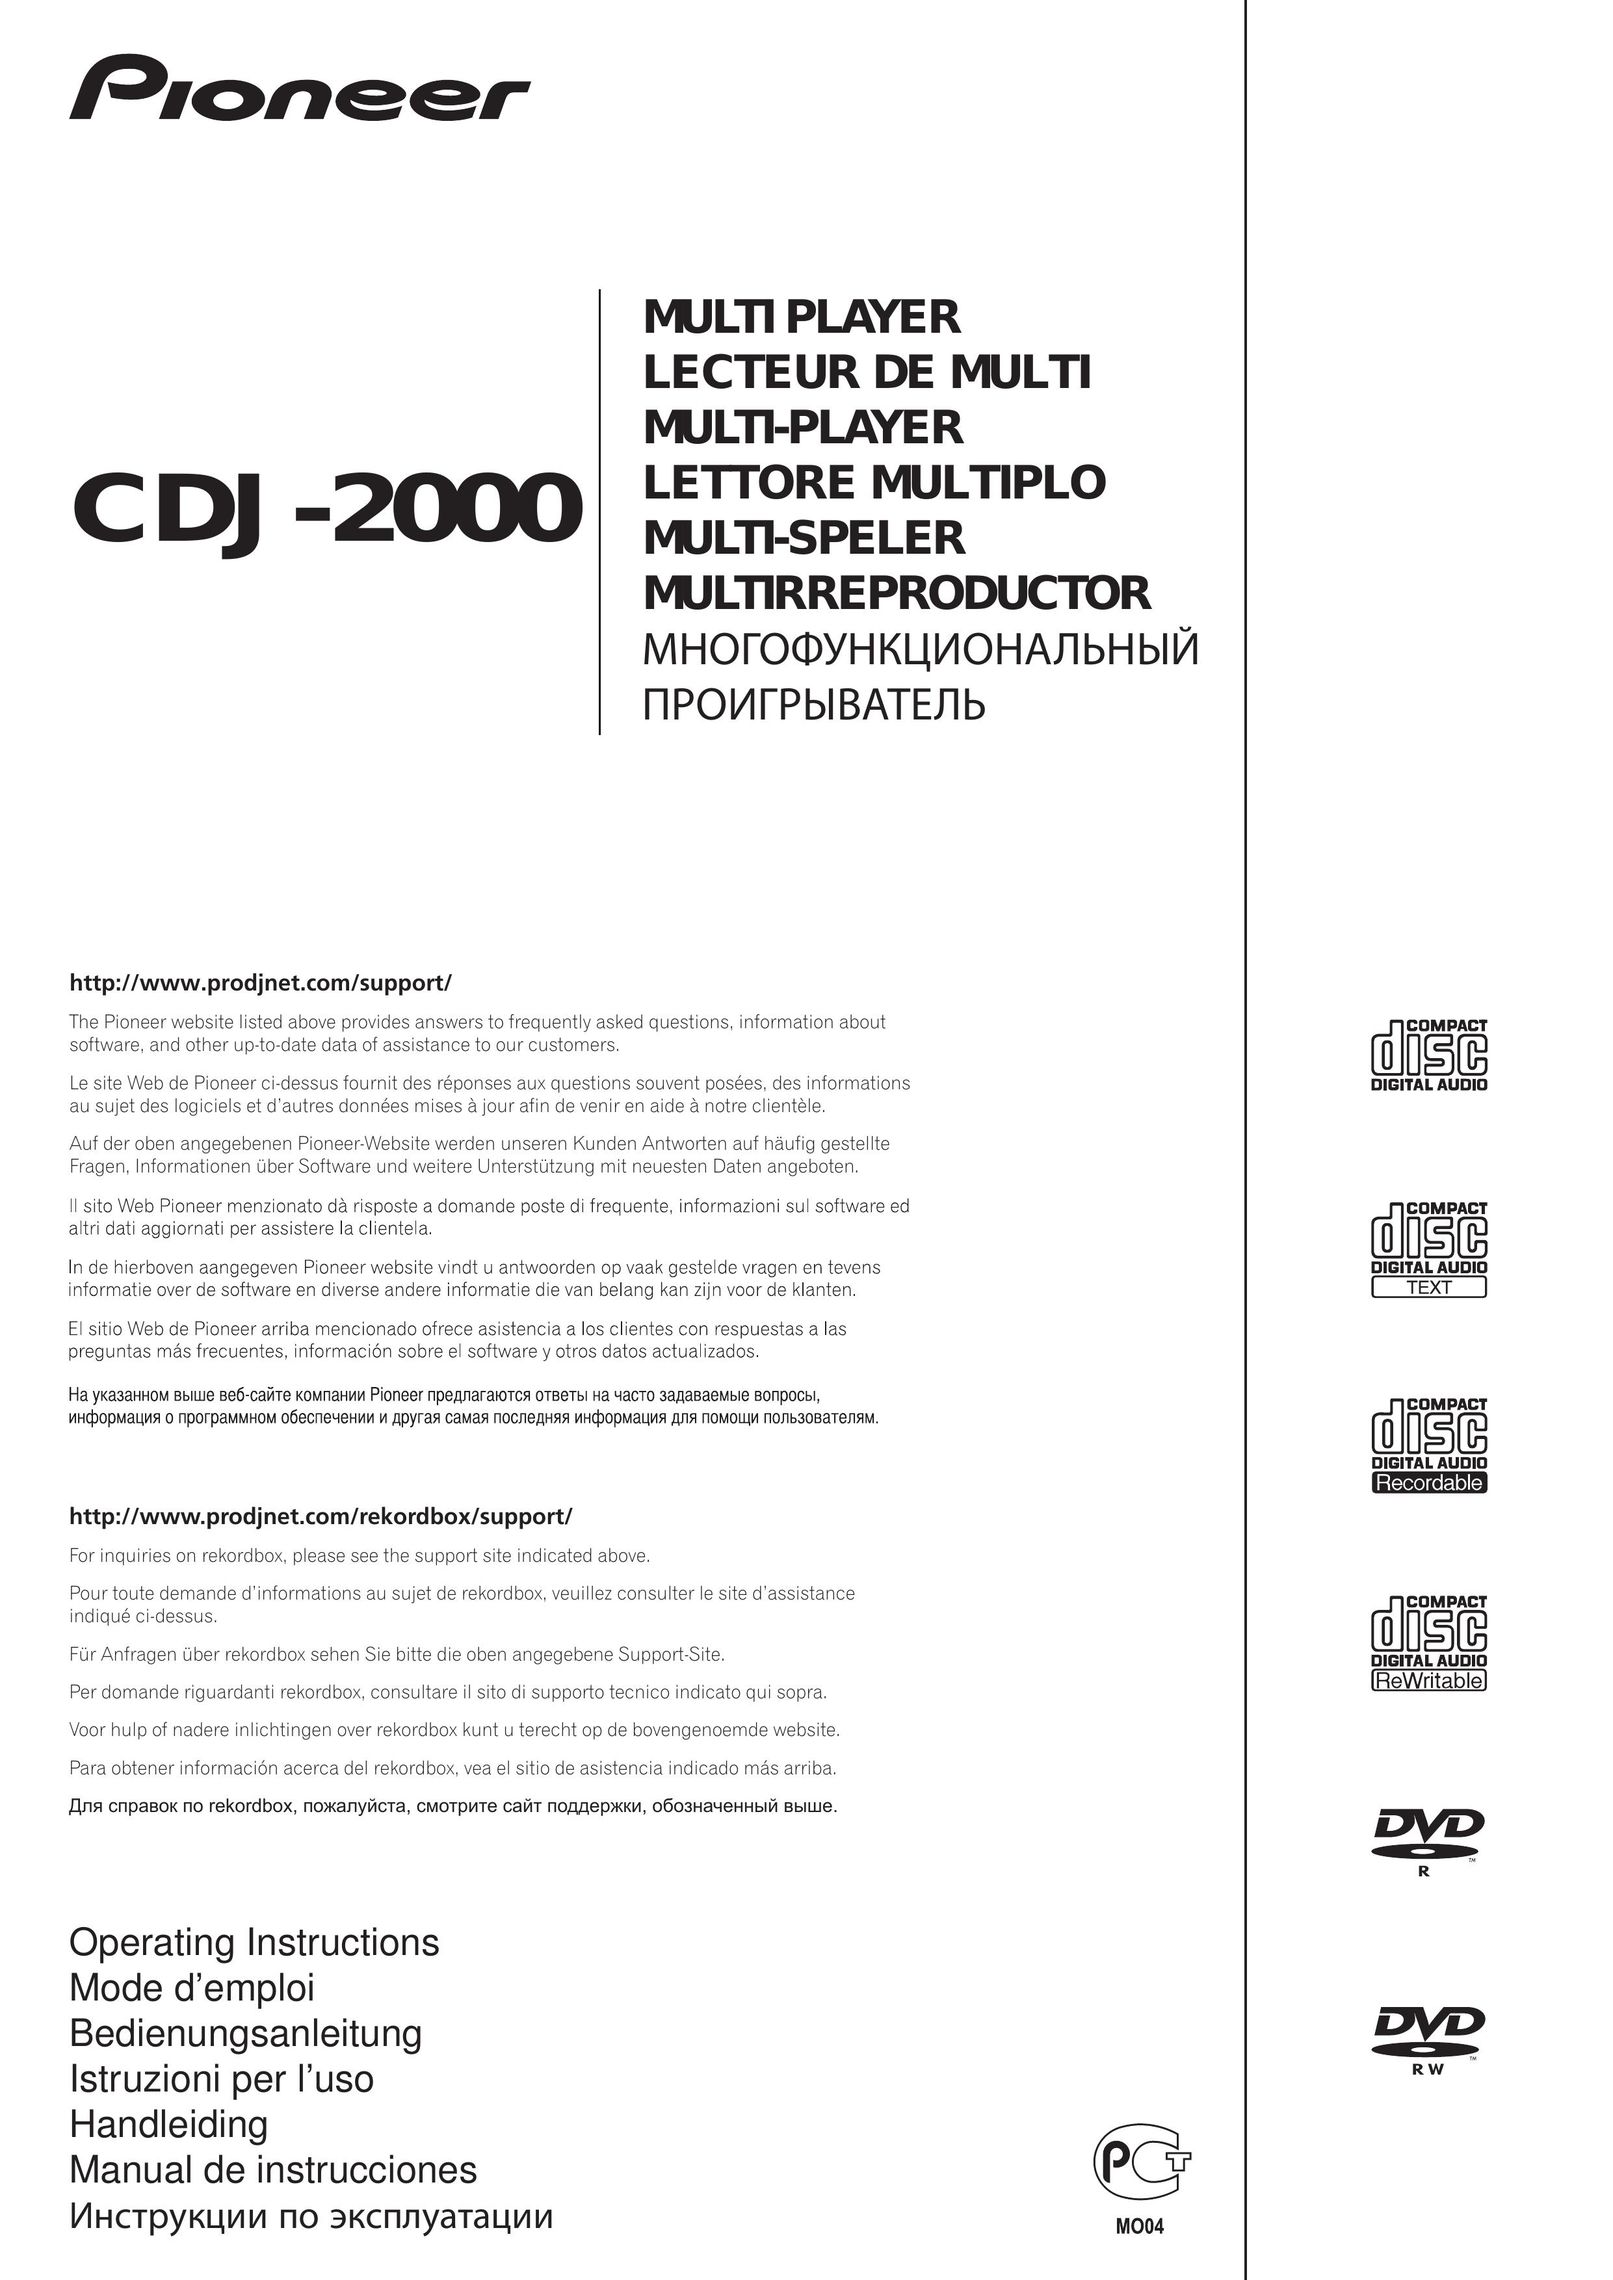 Pioneer CDJ-2000 DVD Player User Manual